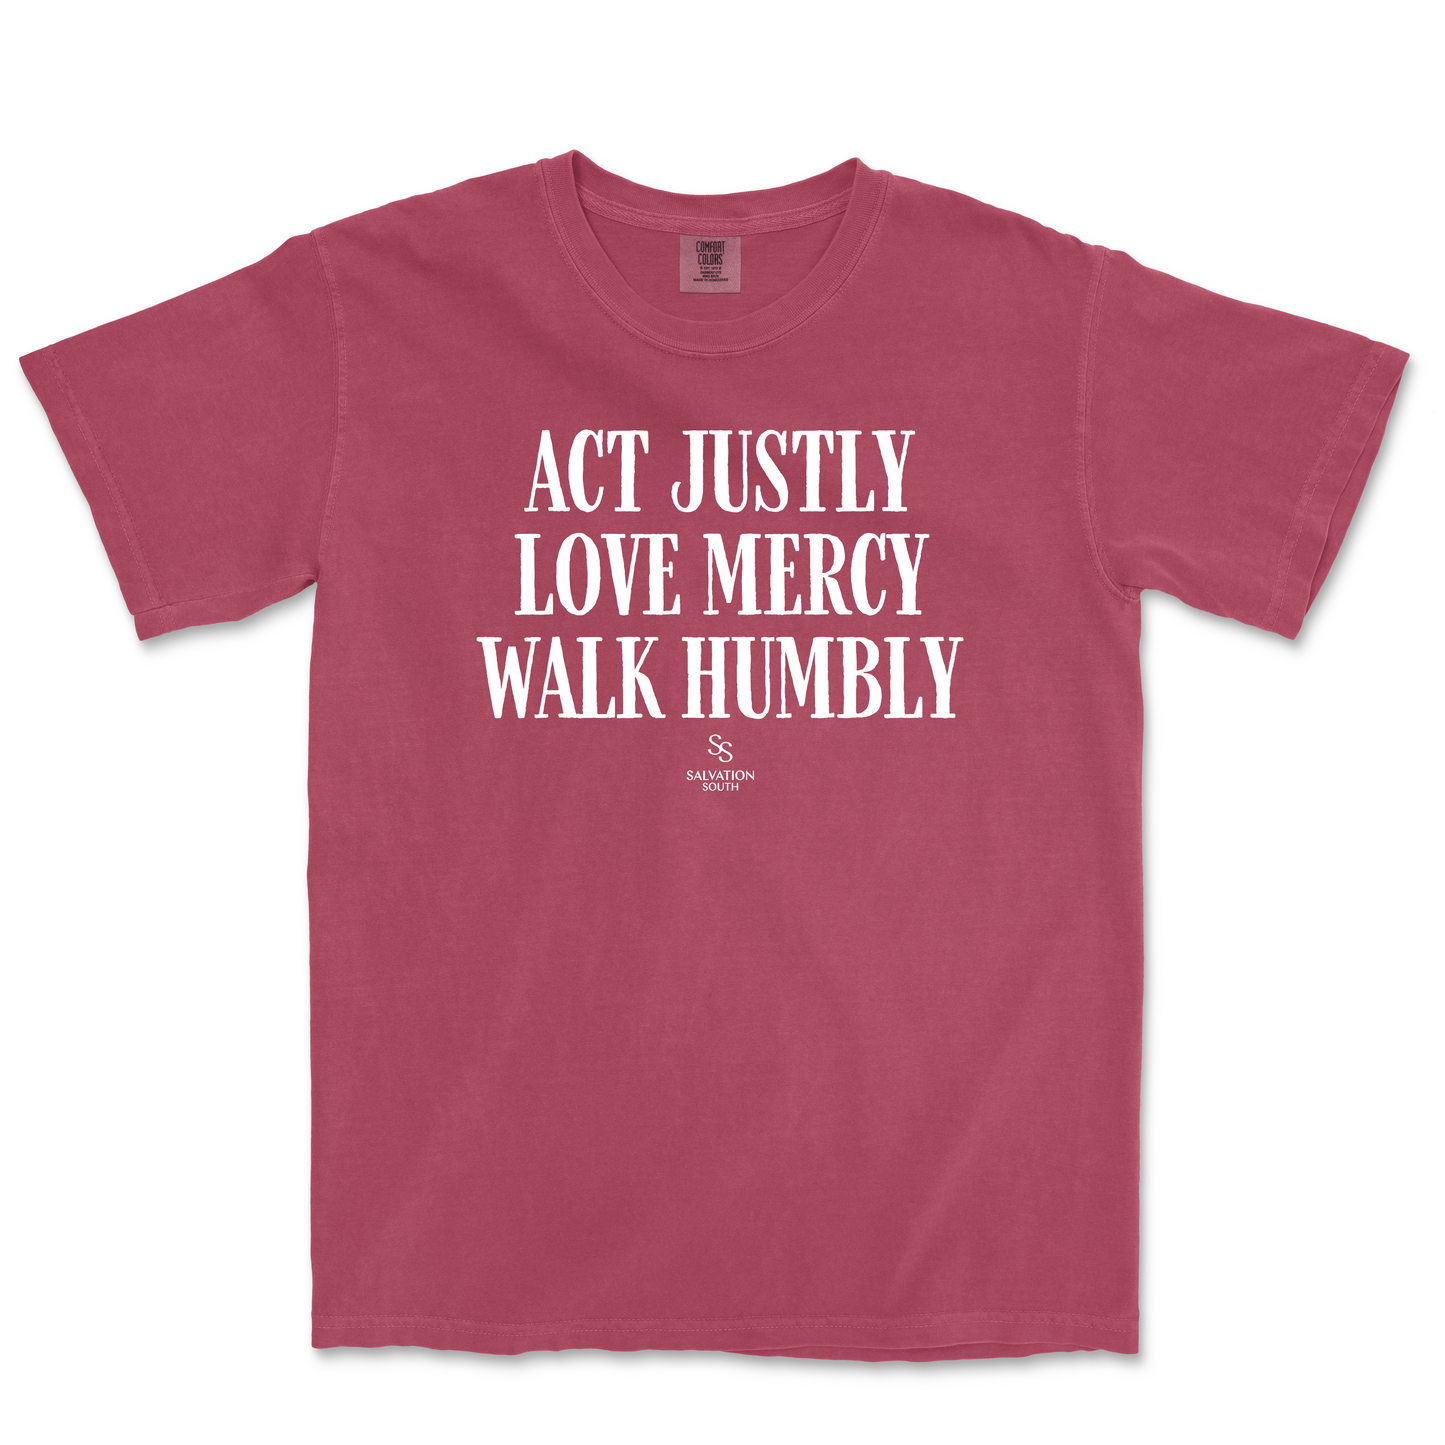 salvation south shirt act justly love mercy walk humbly cotton tshirt t-shirt